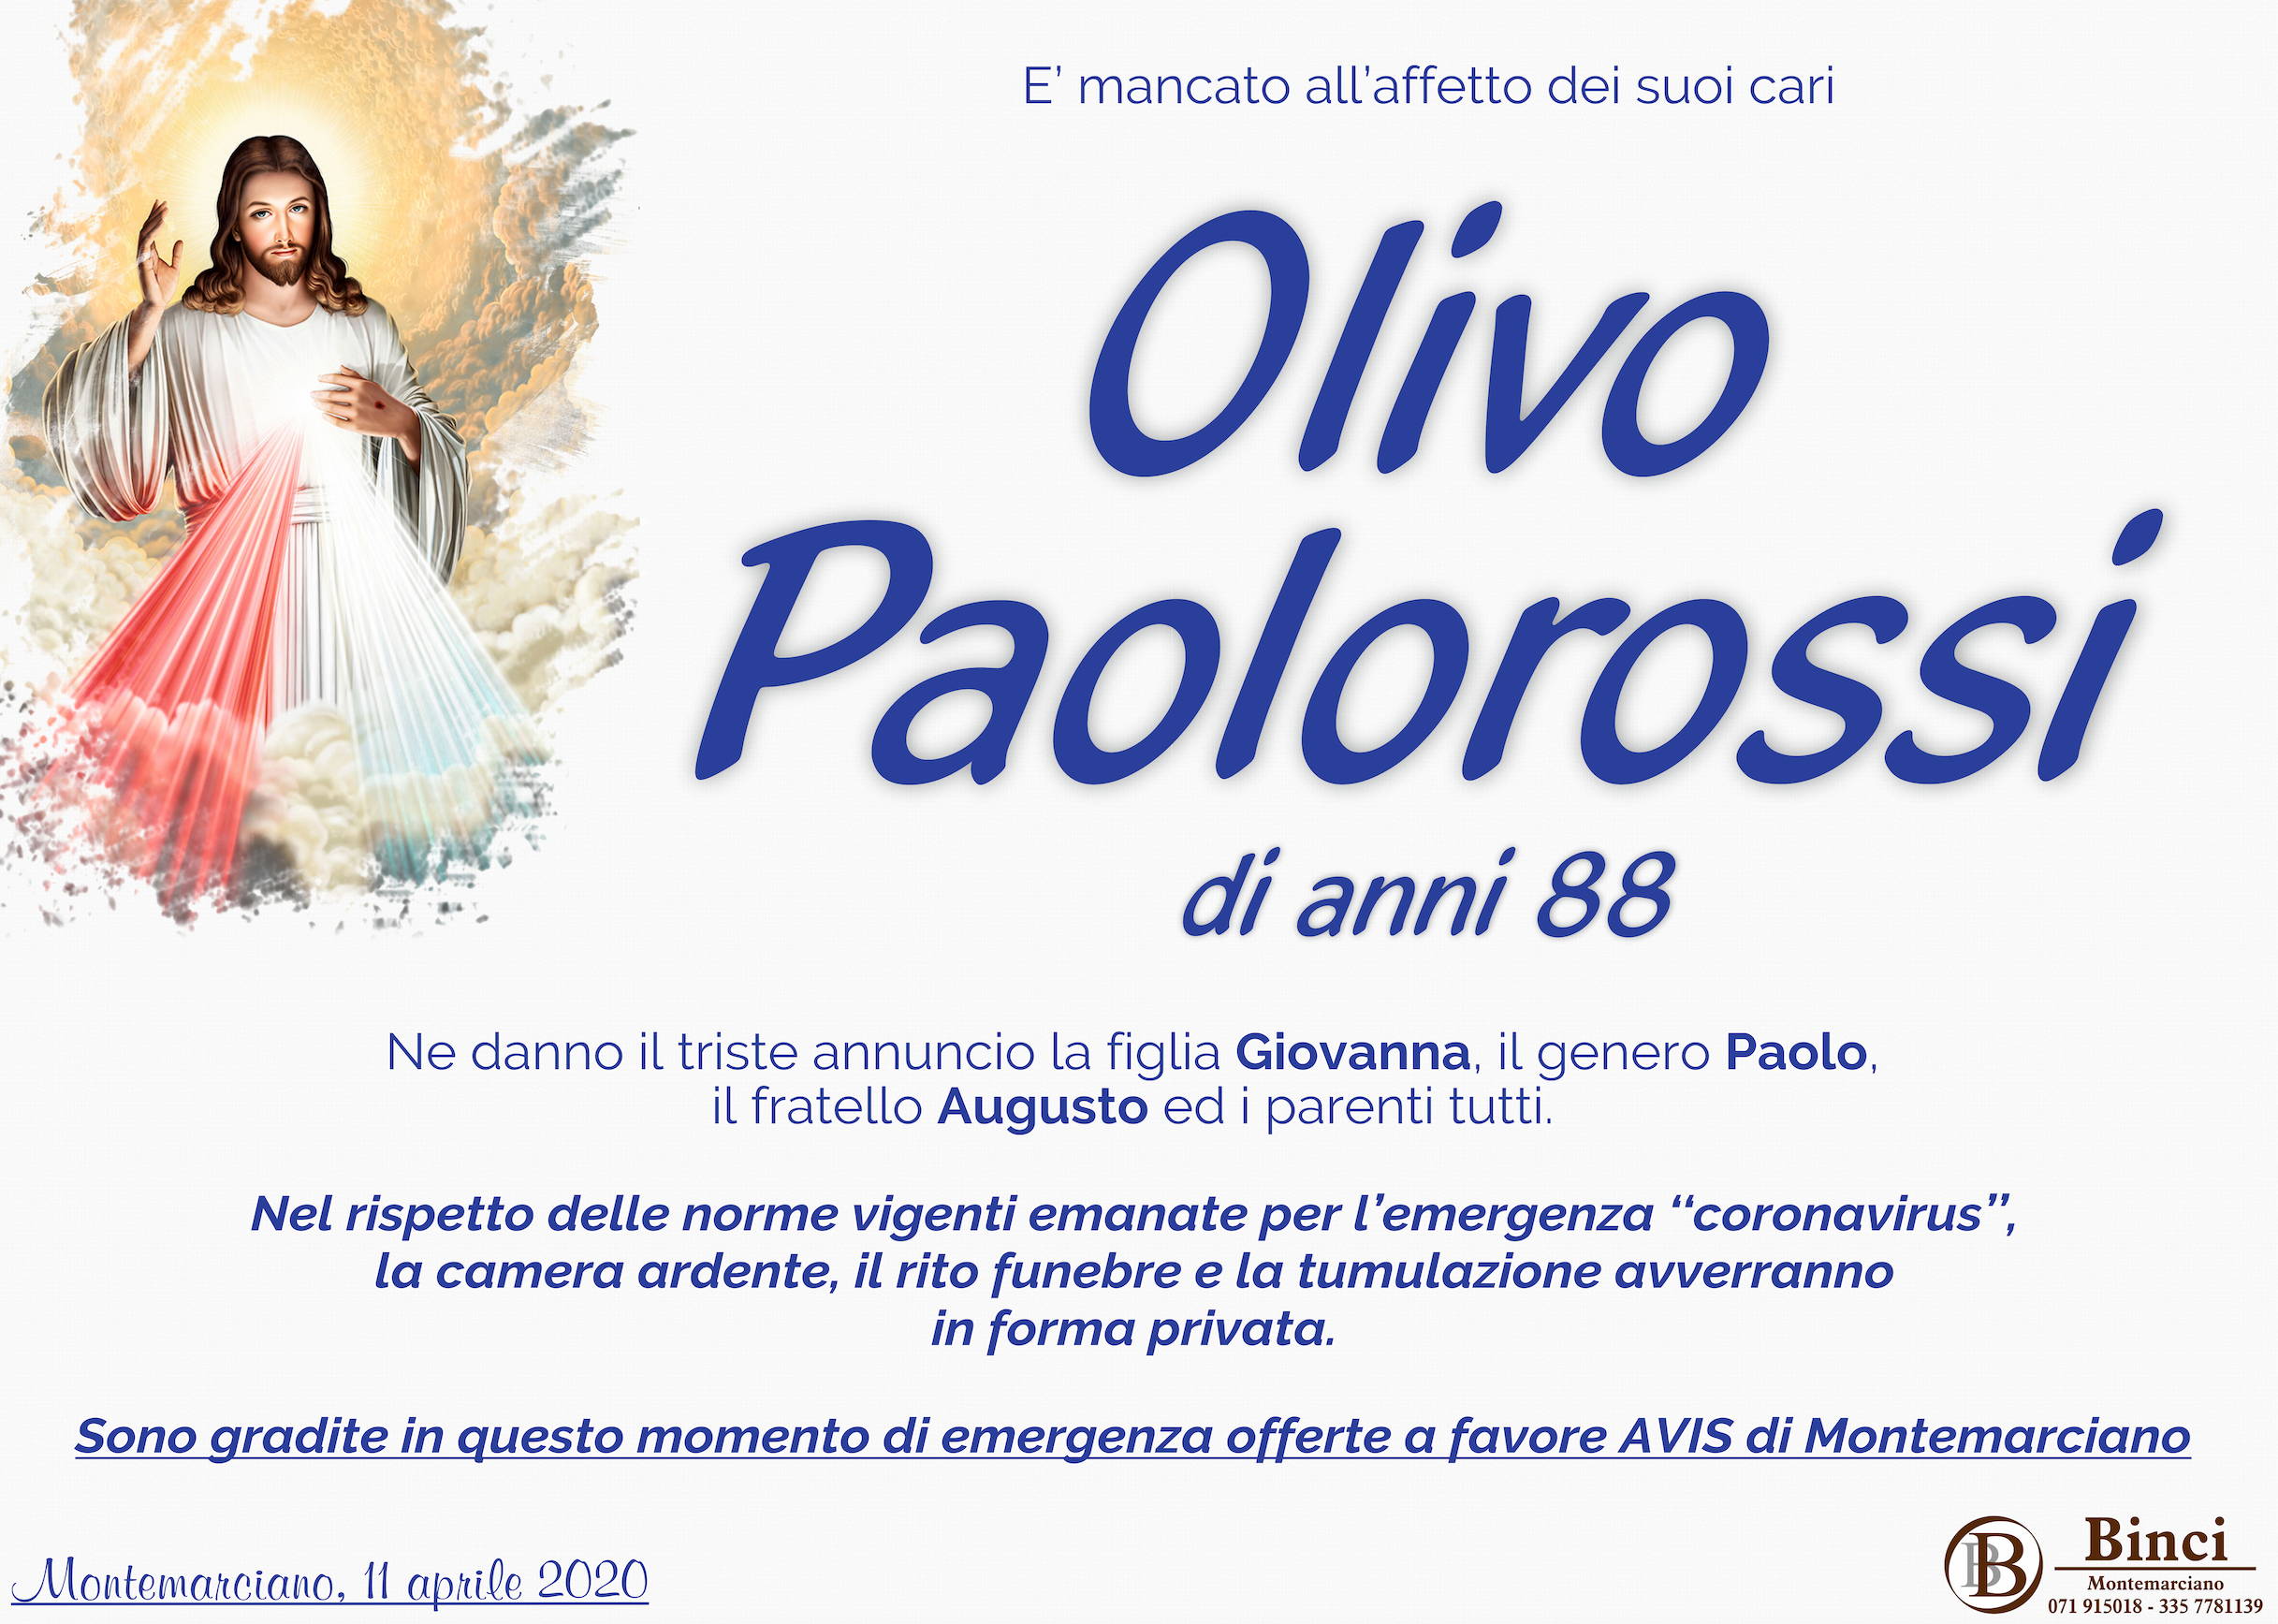 Olivo Paolorossi